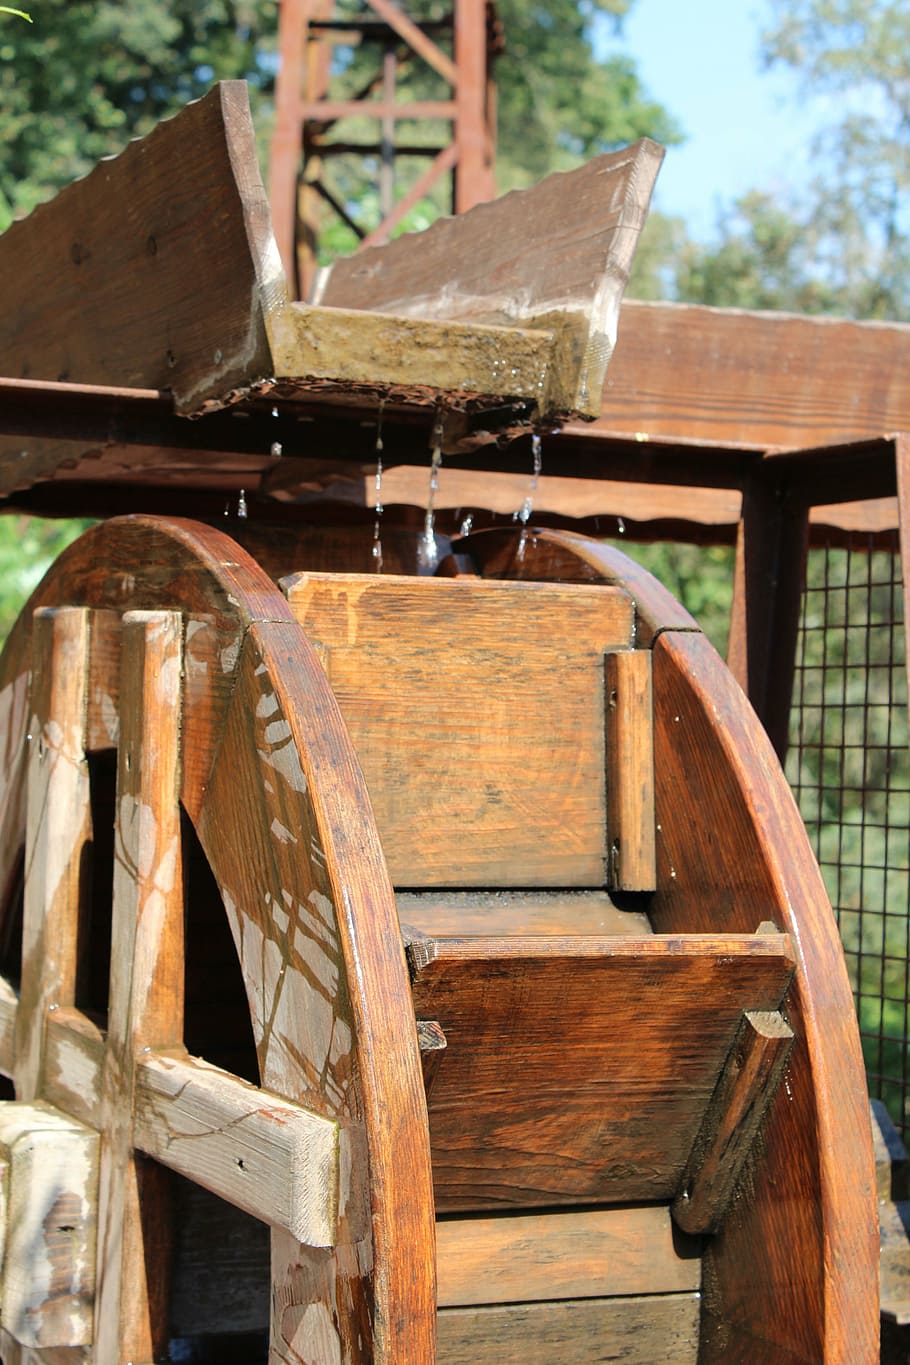 water, wheel, wet, vintage, old, wooden, mill, drop, wood - material, barrel